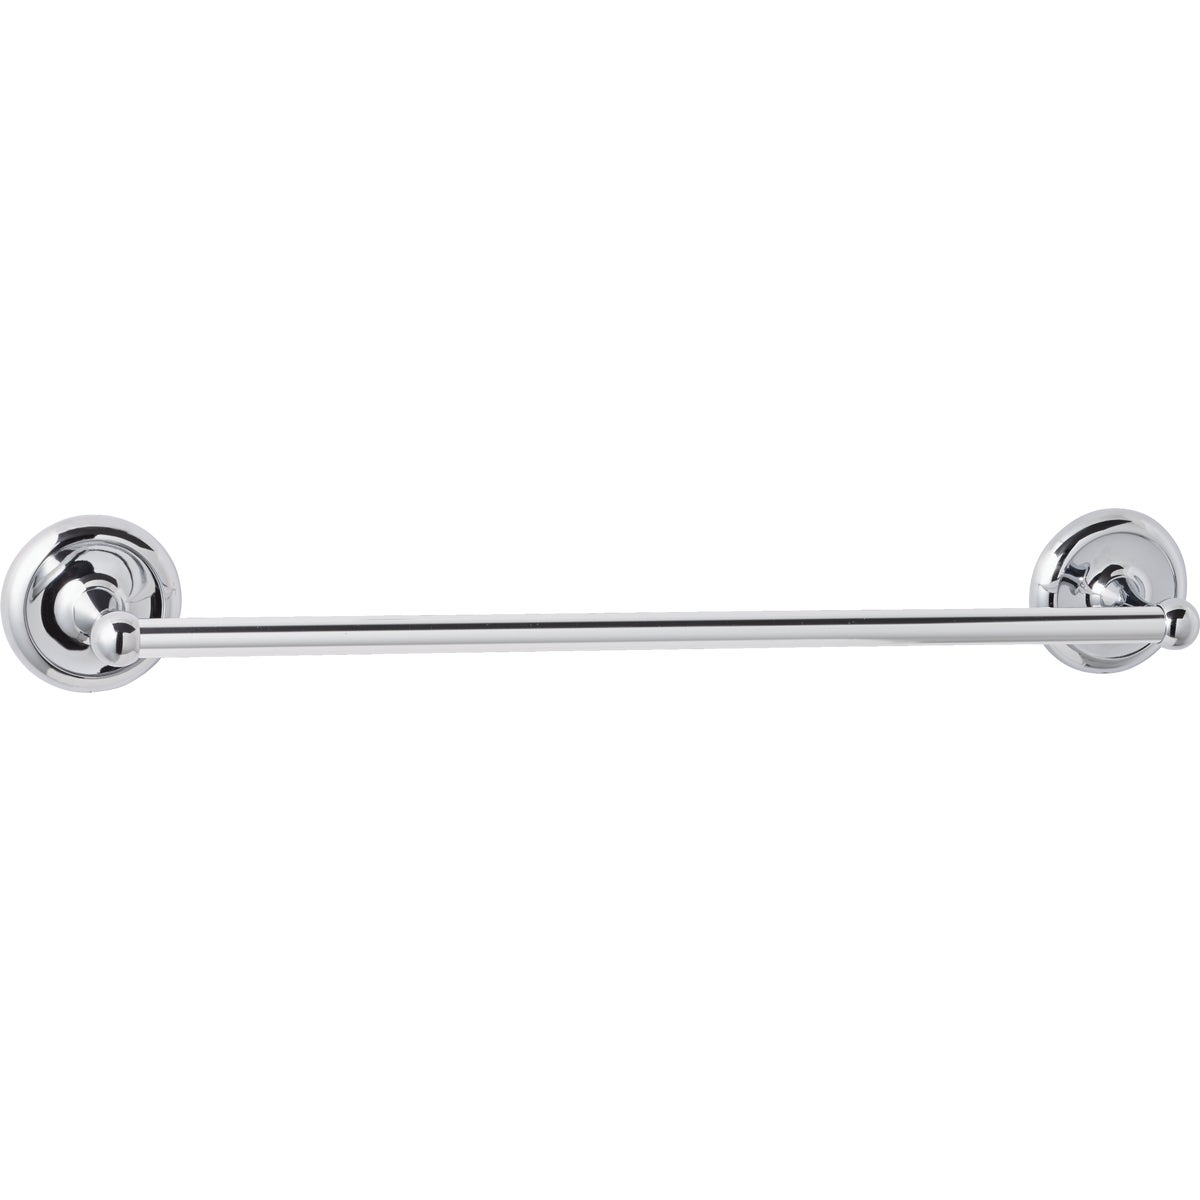 Item 456780, Aria series aluminum/zinc die-cast towel bar with concealed mounting screws